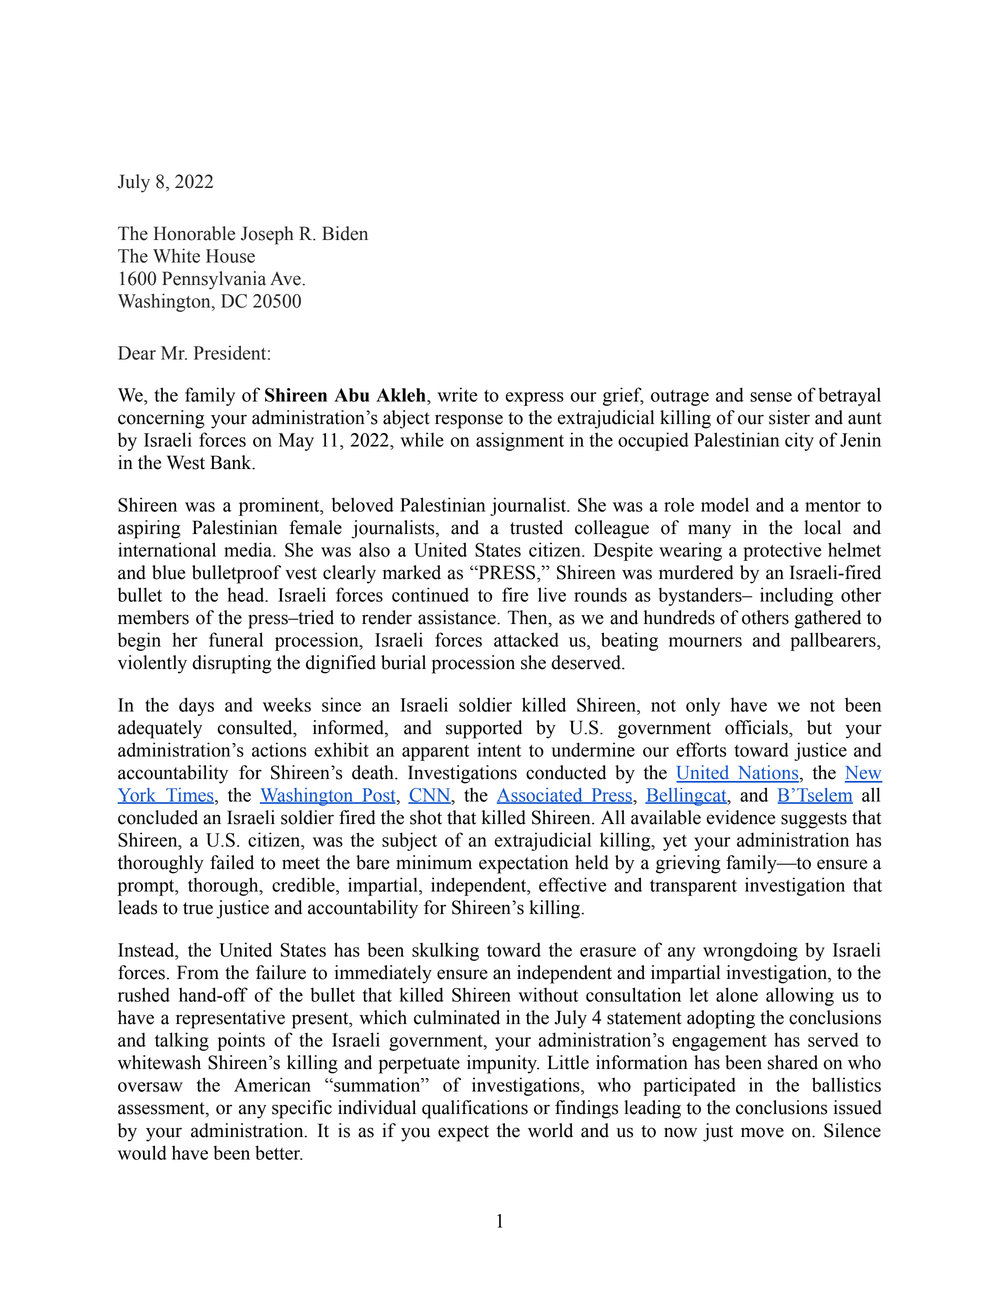 Page 1 from Abu Akleh Family Letter to President Joe Biden